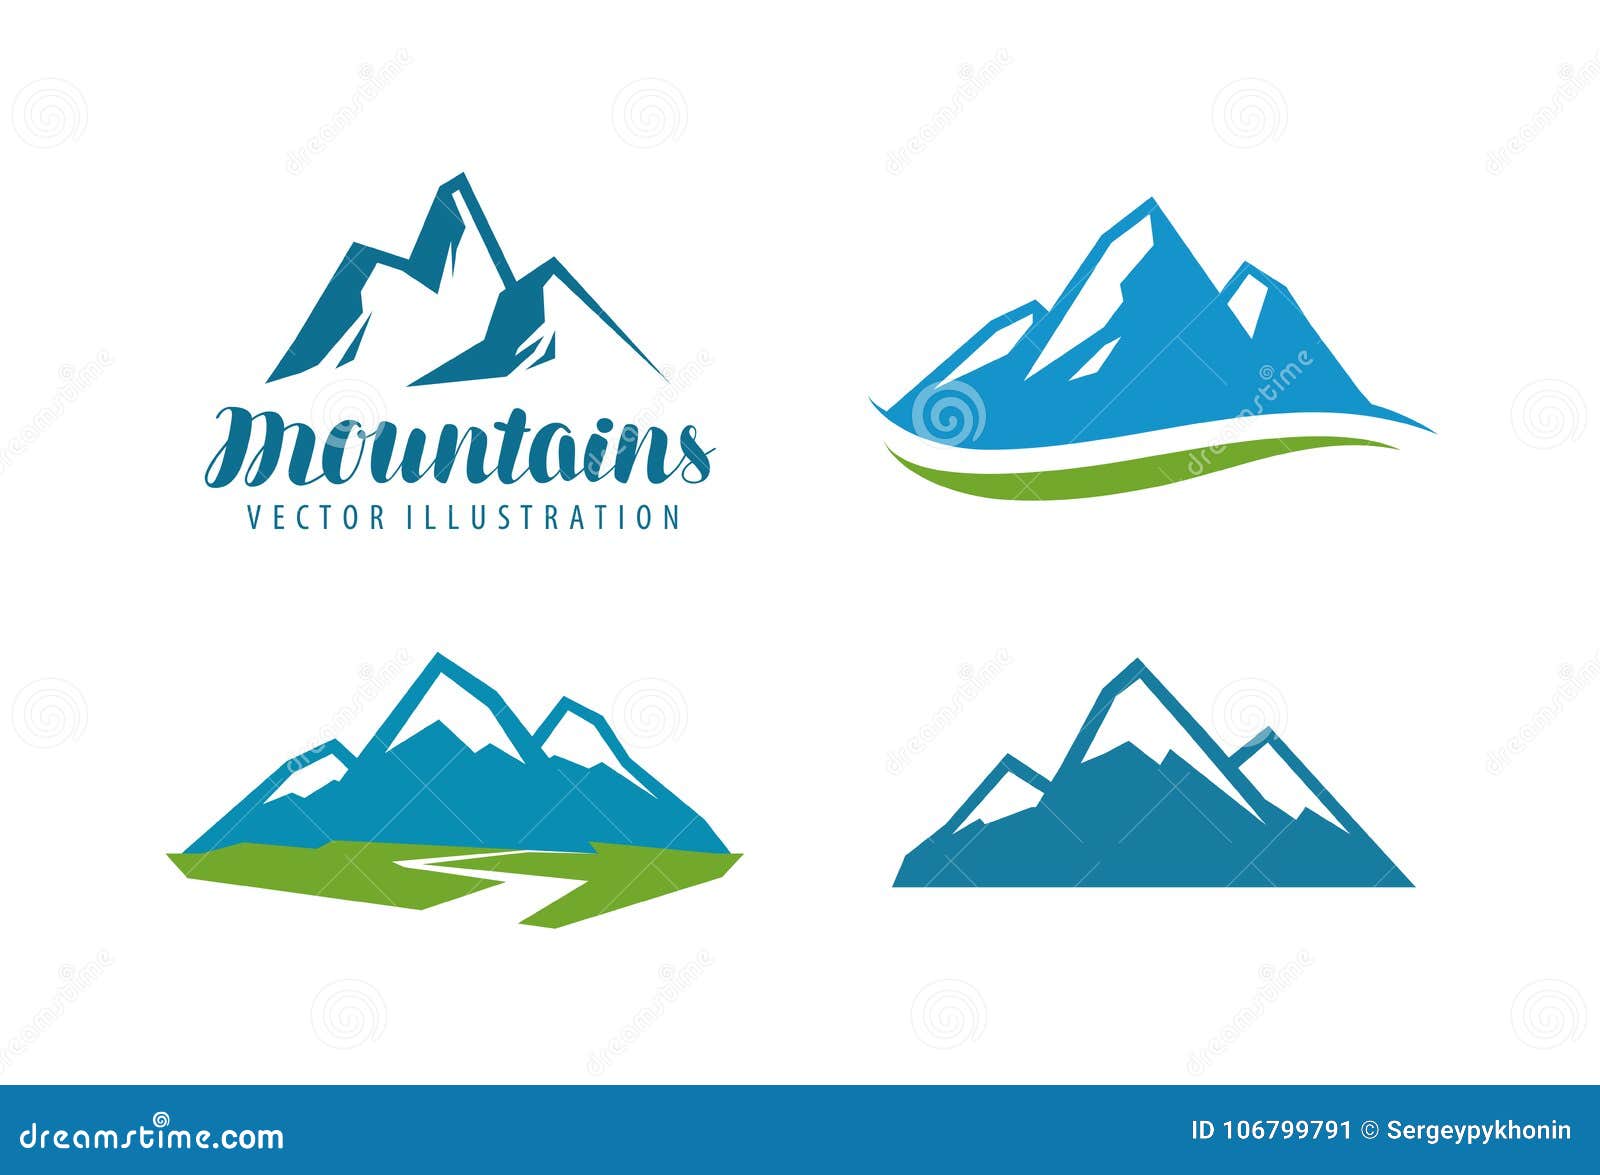 mountains, rock logo or label. mountaineering, climbing, alpinism icon.  